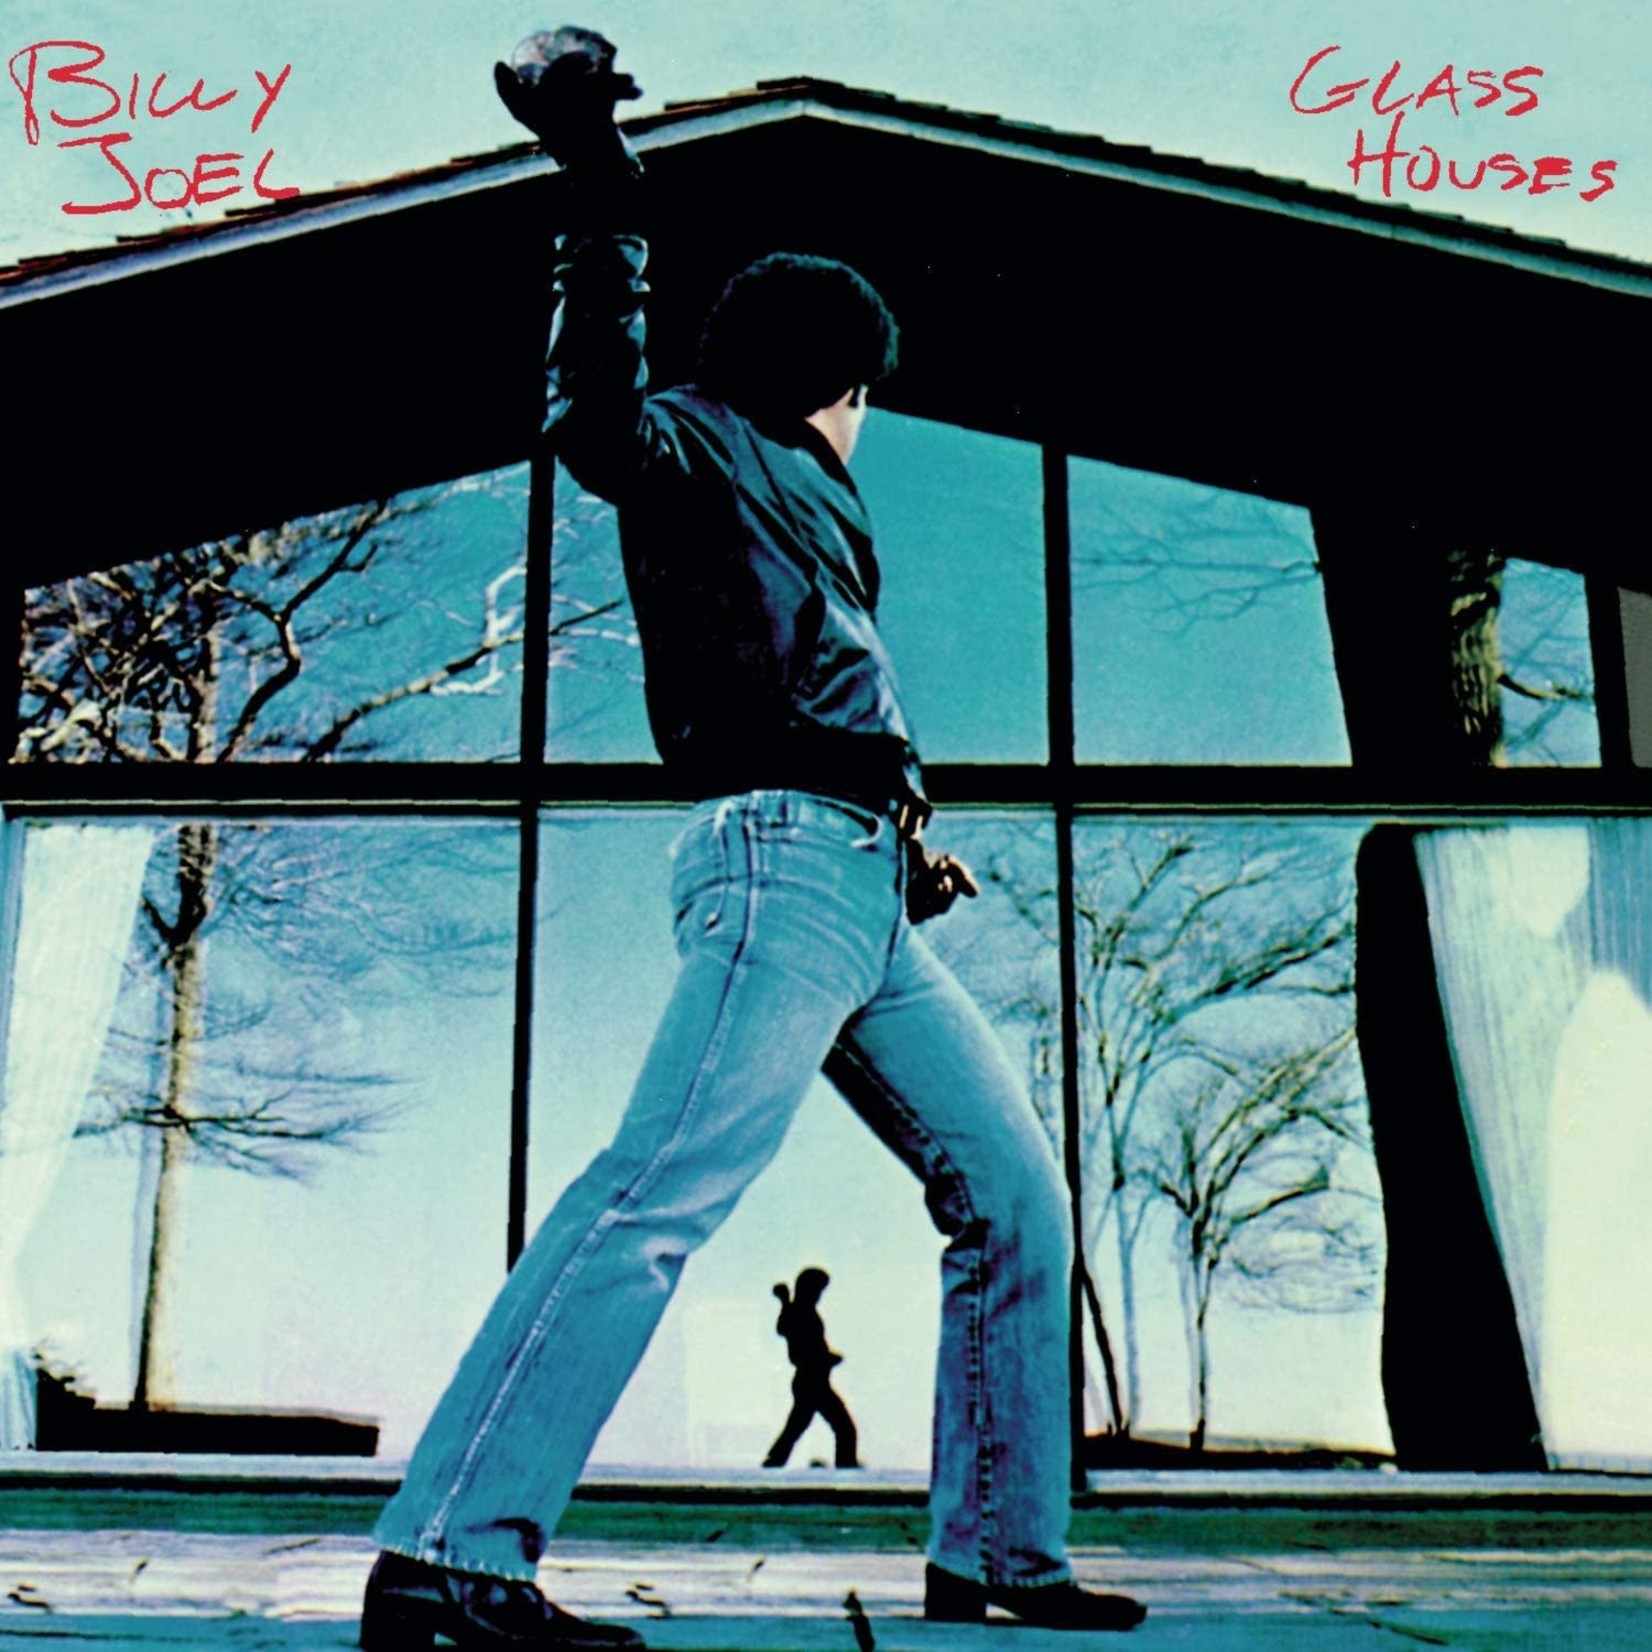 Billy Joel - Glass Houses [USED CD]